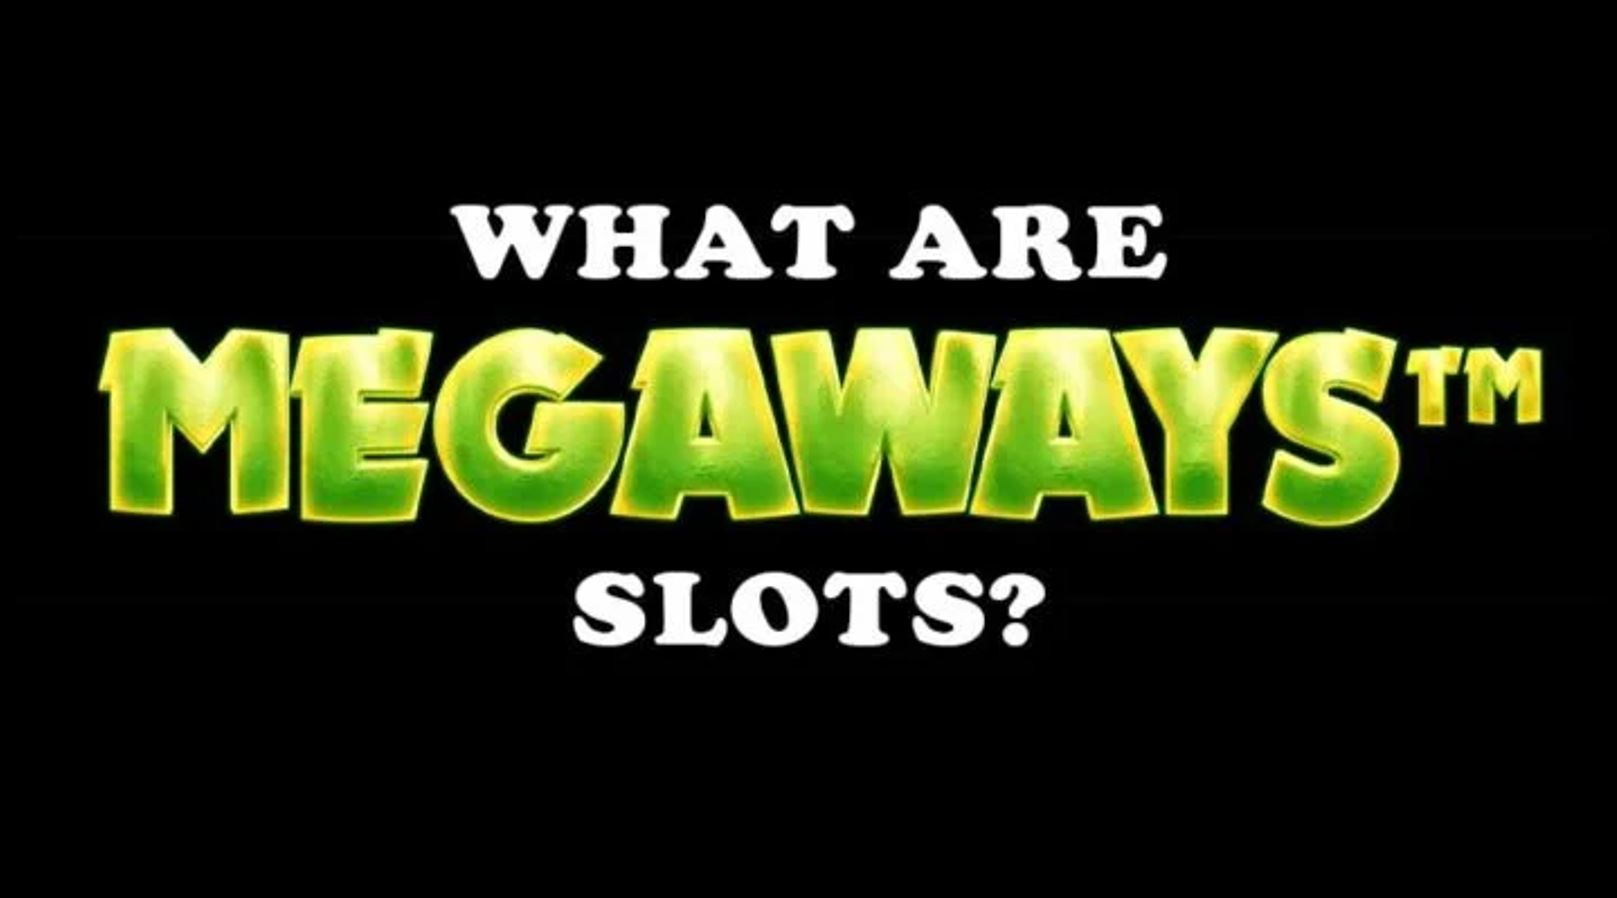 Megaways Slots: The Number of Winning Slots